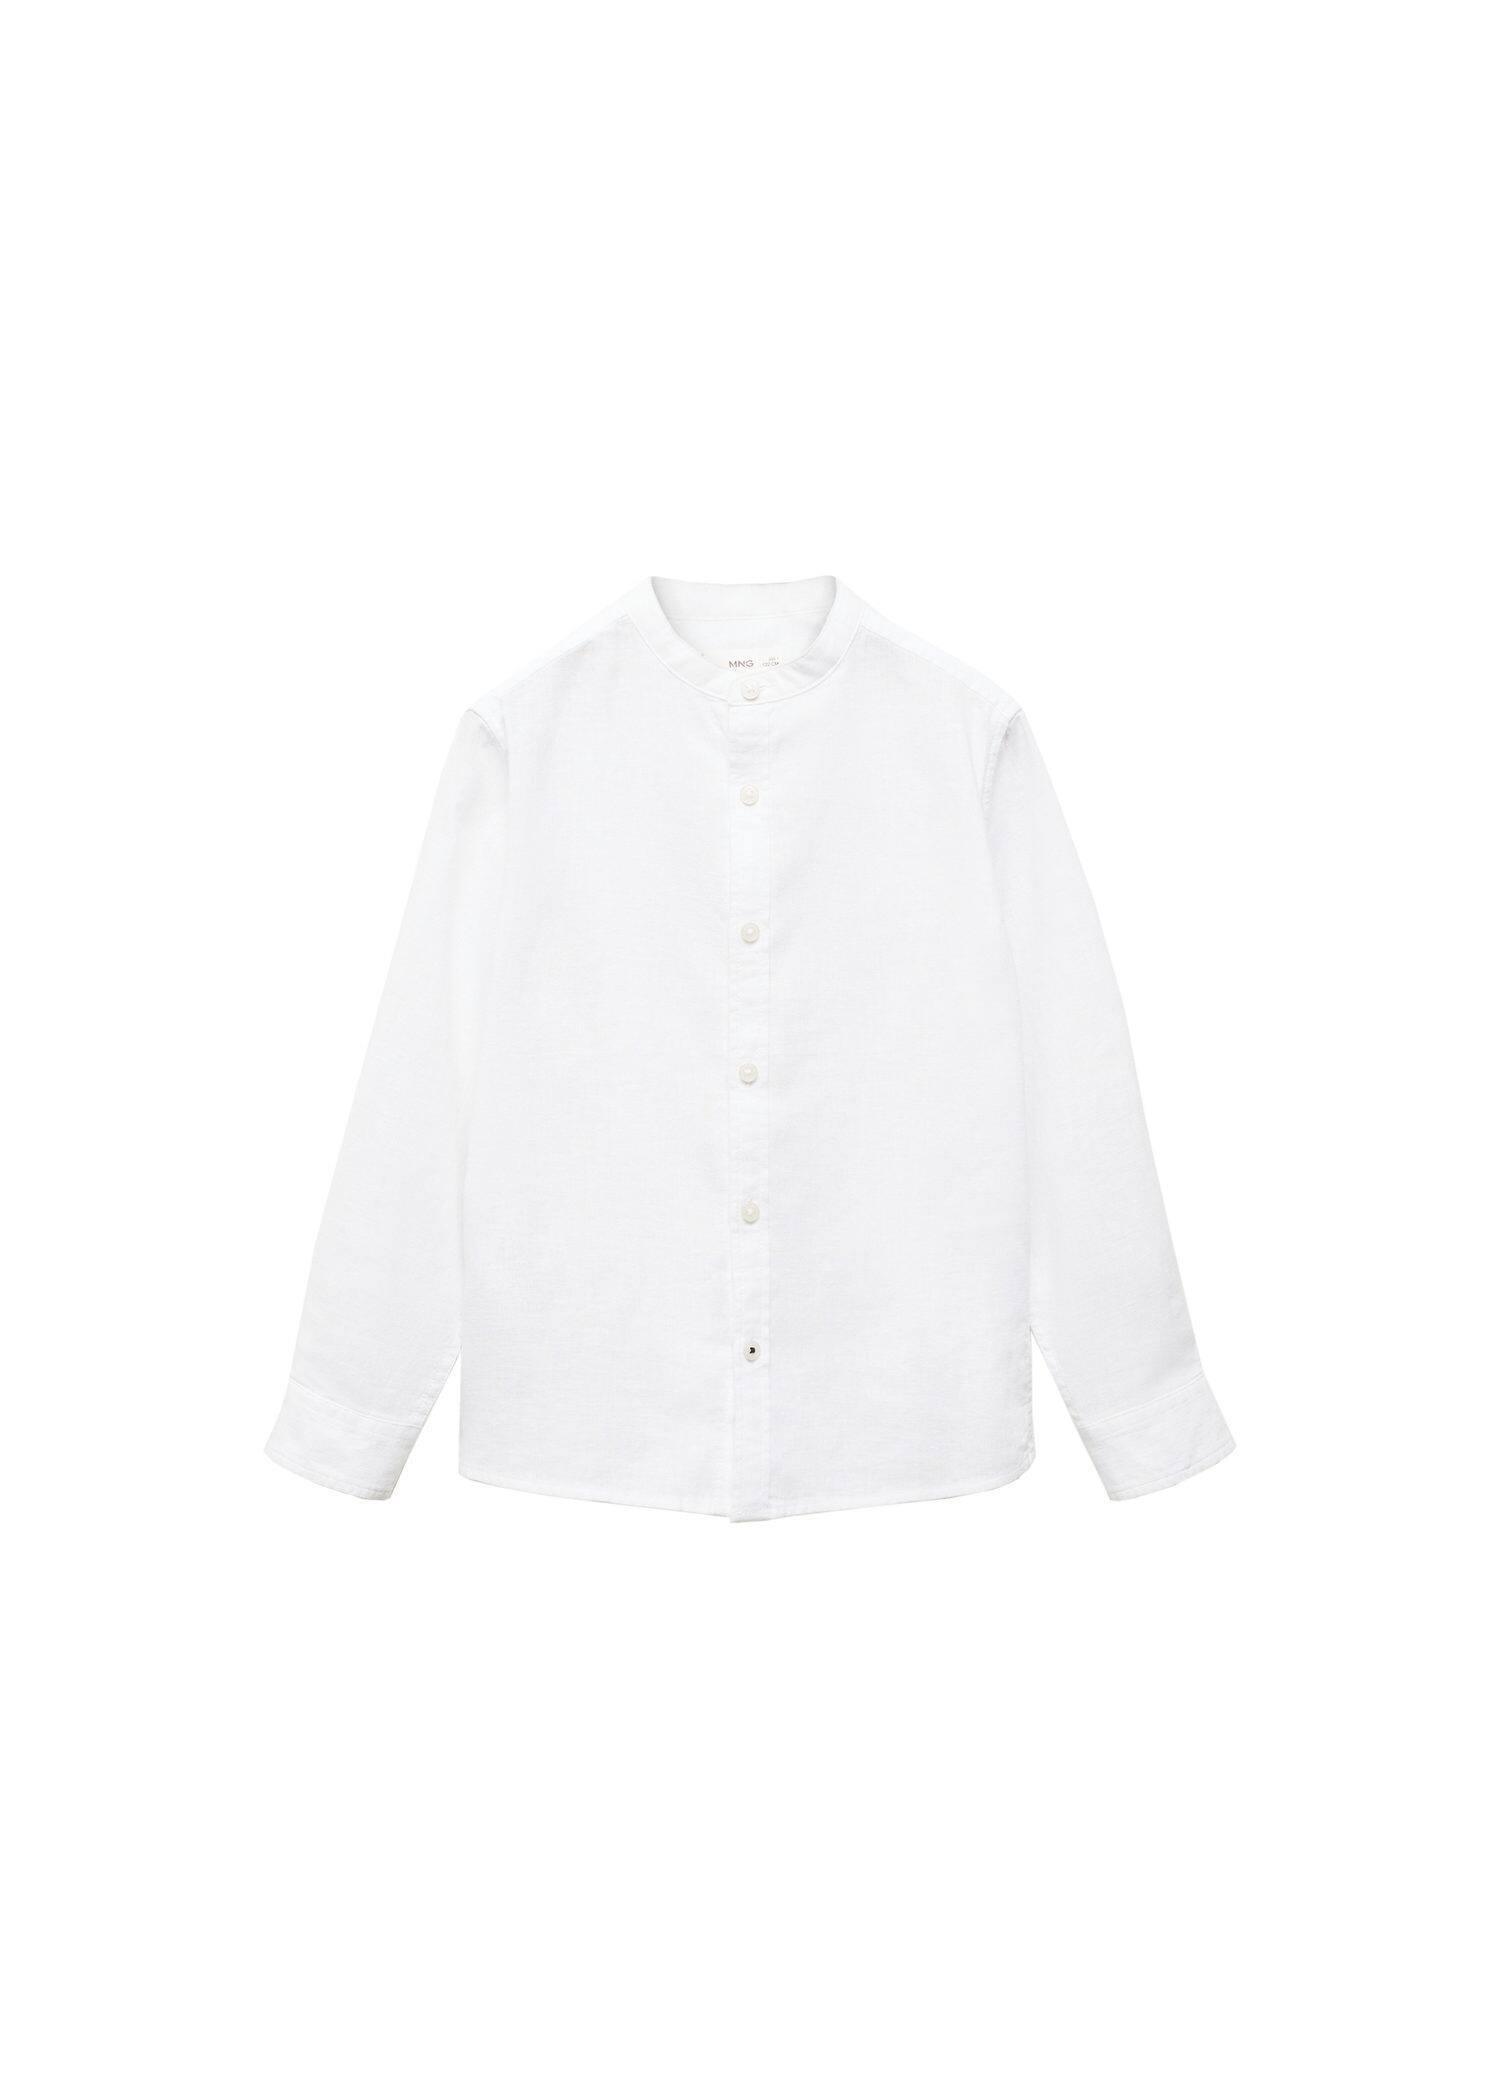 Mango - White Regular-Fit Linen Shirt, Kids Boys